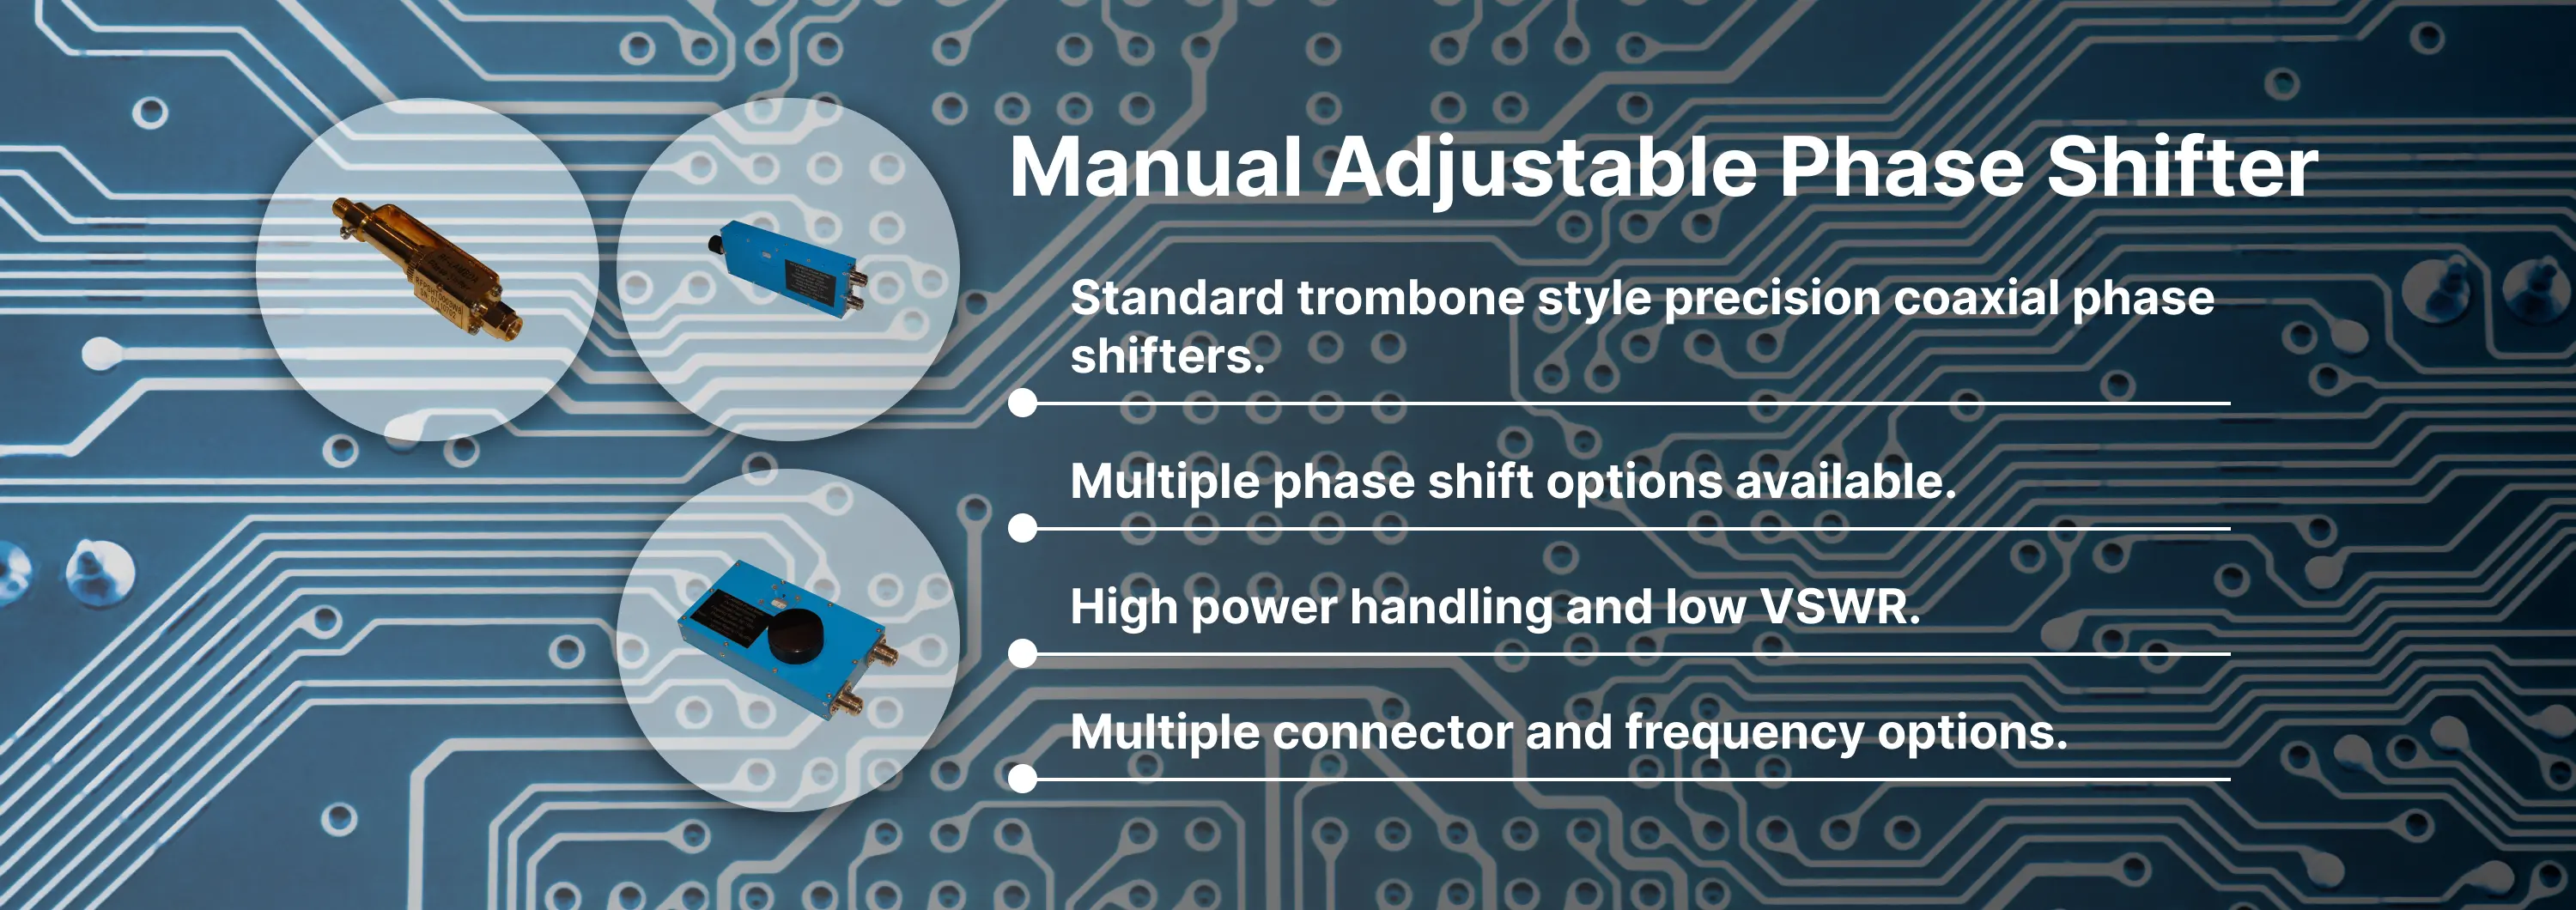 Manual Adjustable Phase Shifter Banner